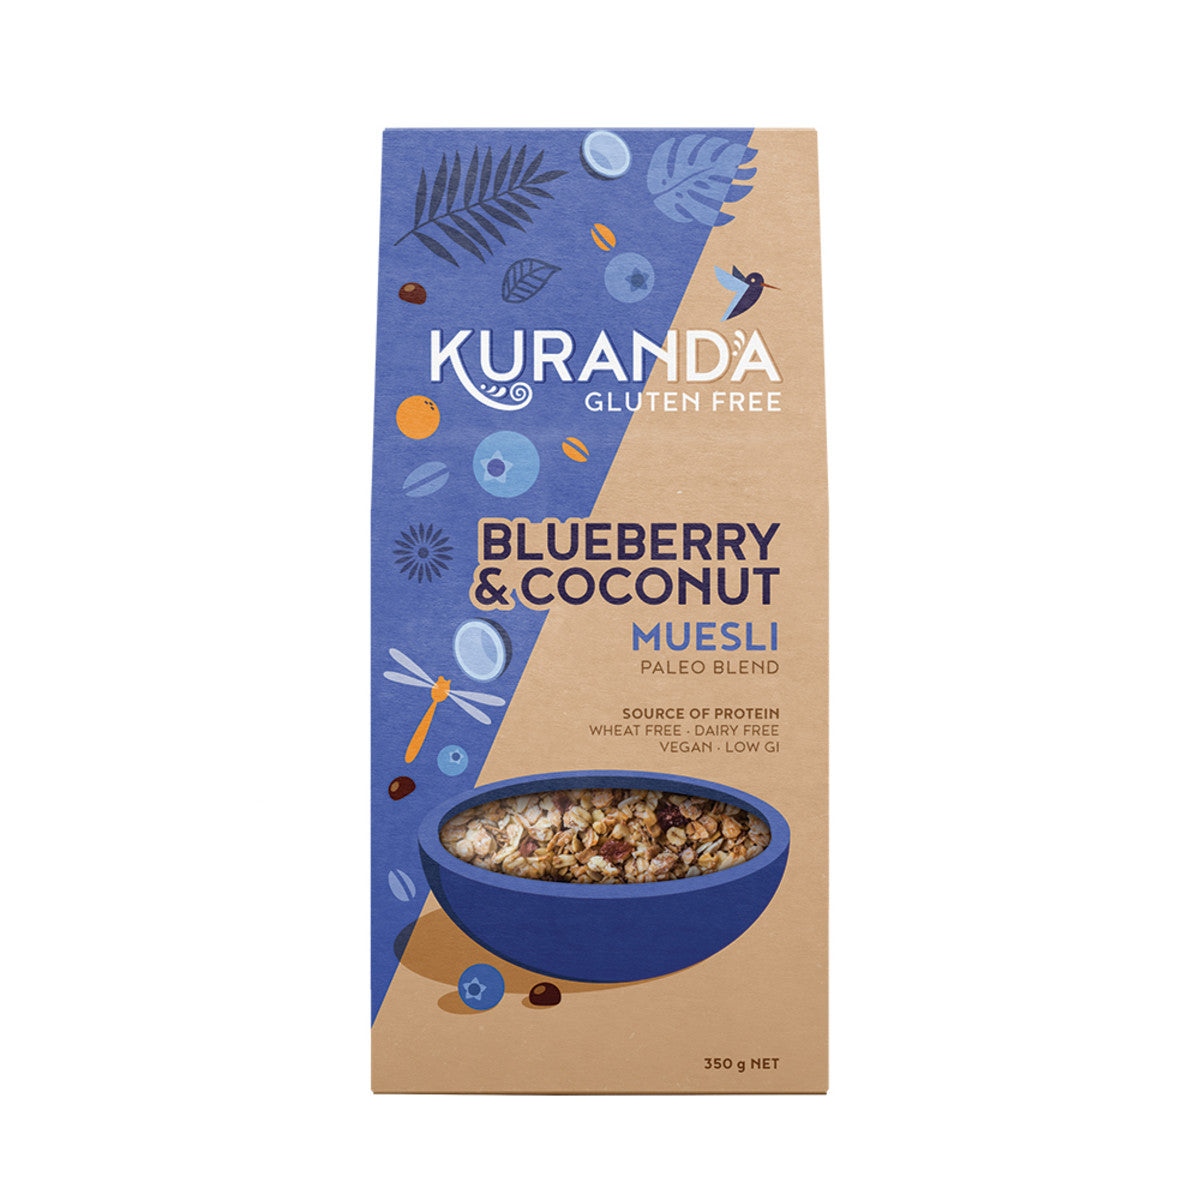 Kuranda - Gluten Free Muesli Blueberry Coconut (Paleo Blend)